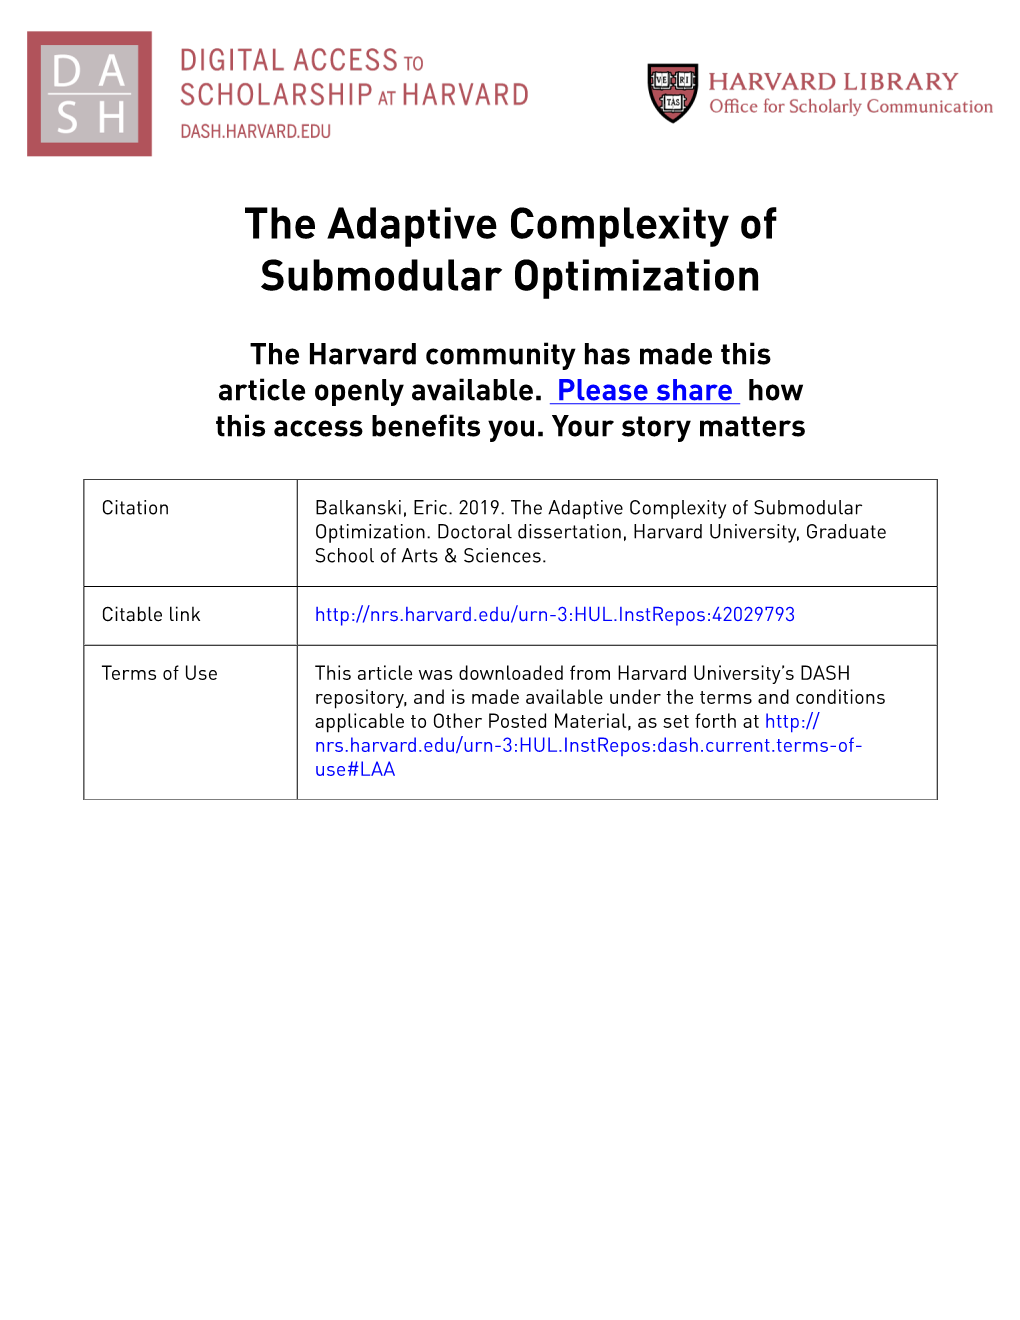 The Adaptive Complexity of Submodular Optimization